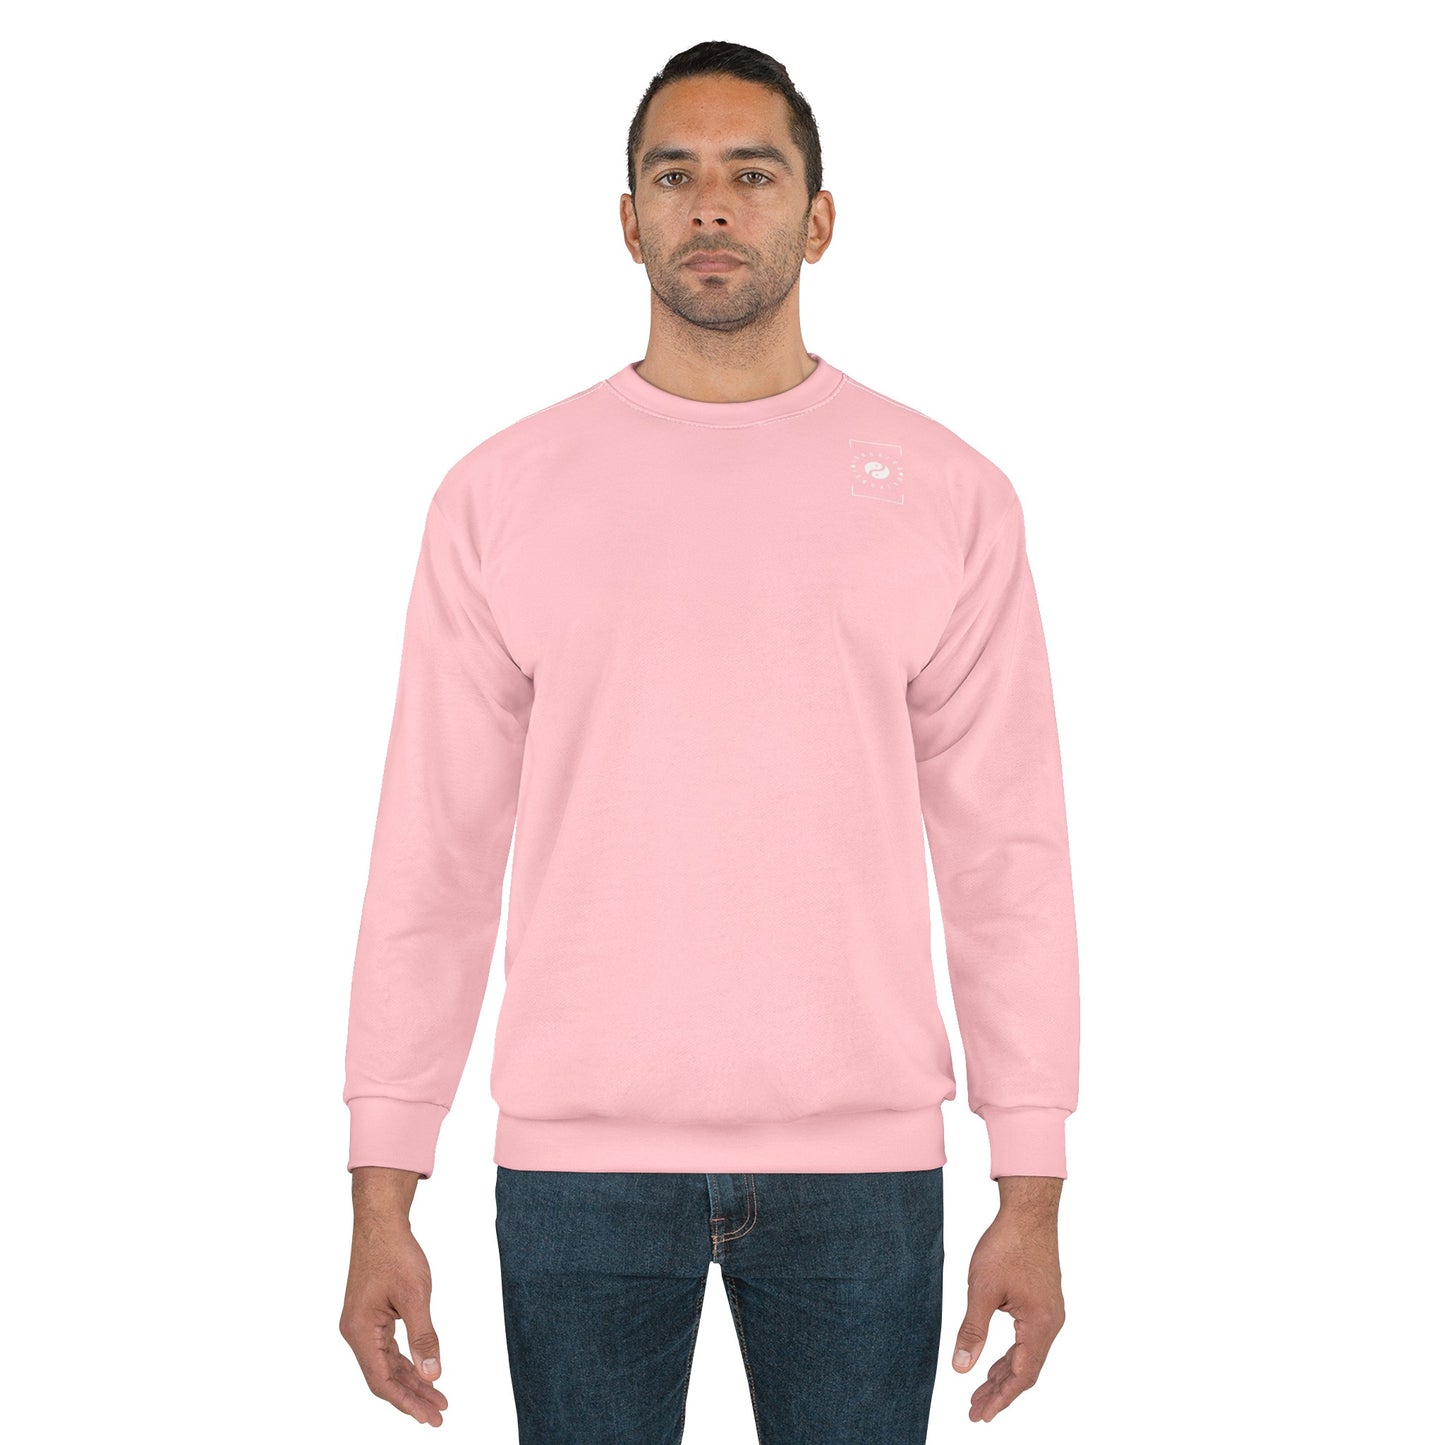 FFCCD4 Light Pink - Unisex Sweatshirt